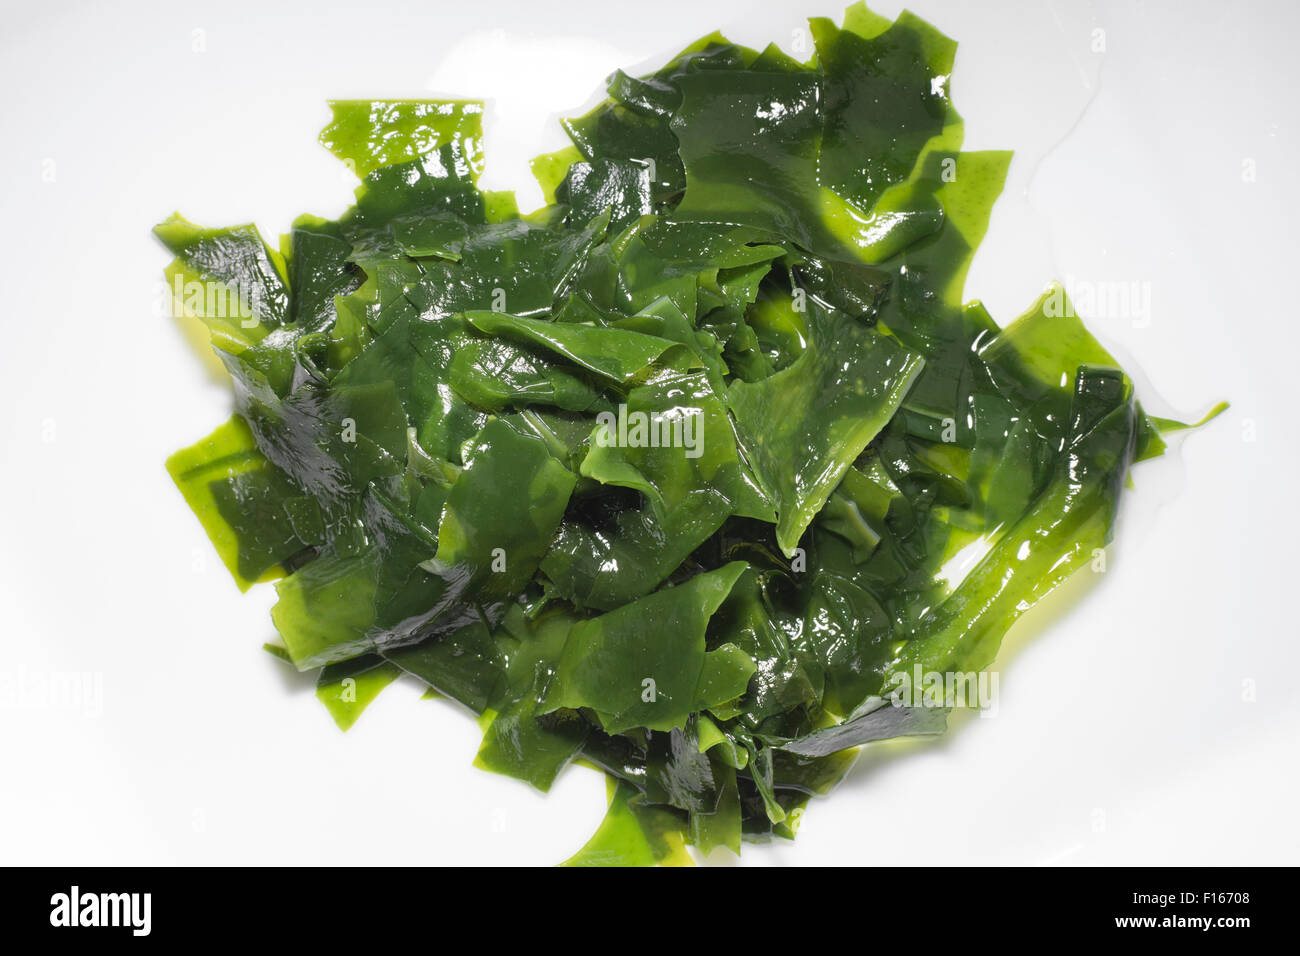 Re-hydrated / reconstituted wakkame (Undaria pinnatifida), a very popular Asian and Oriental seaweed food. Stock Photo